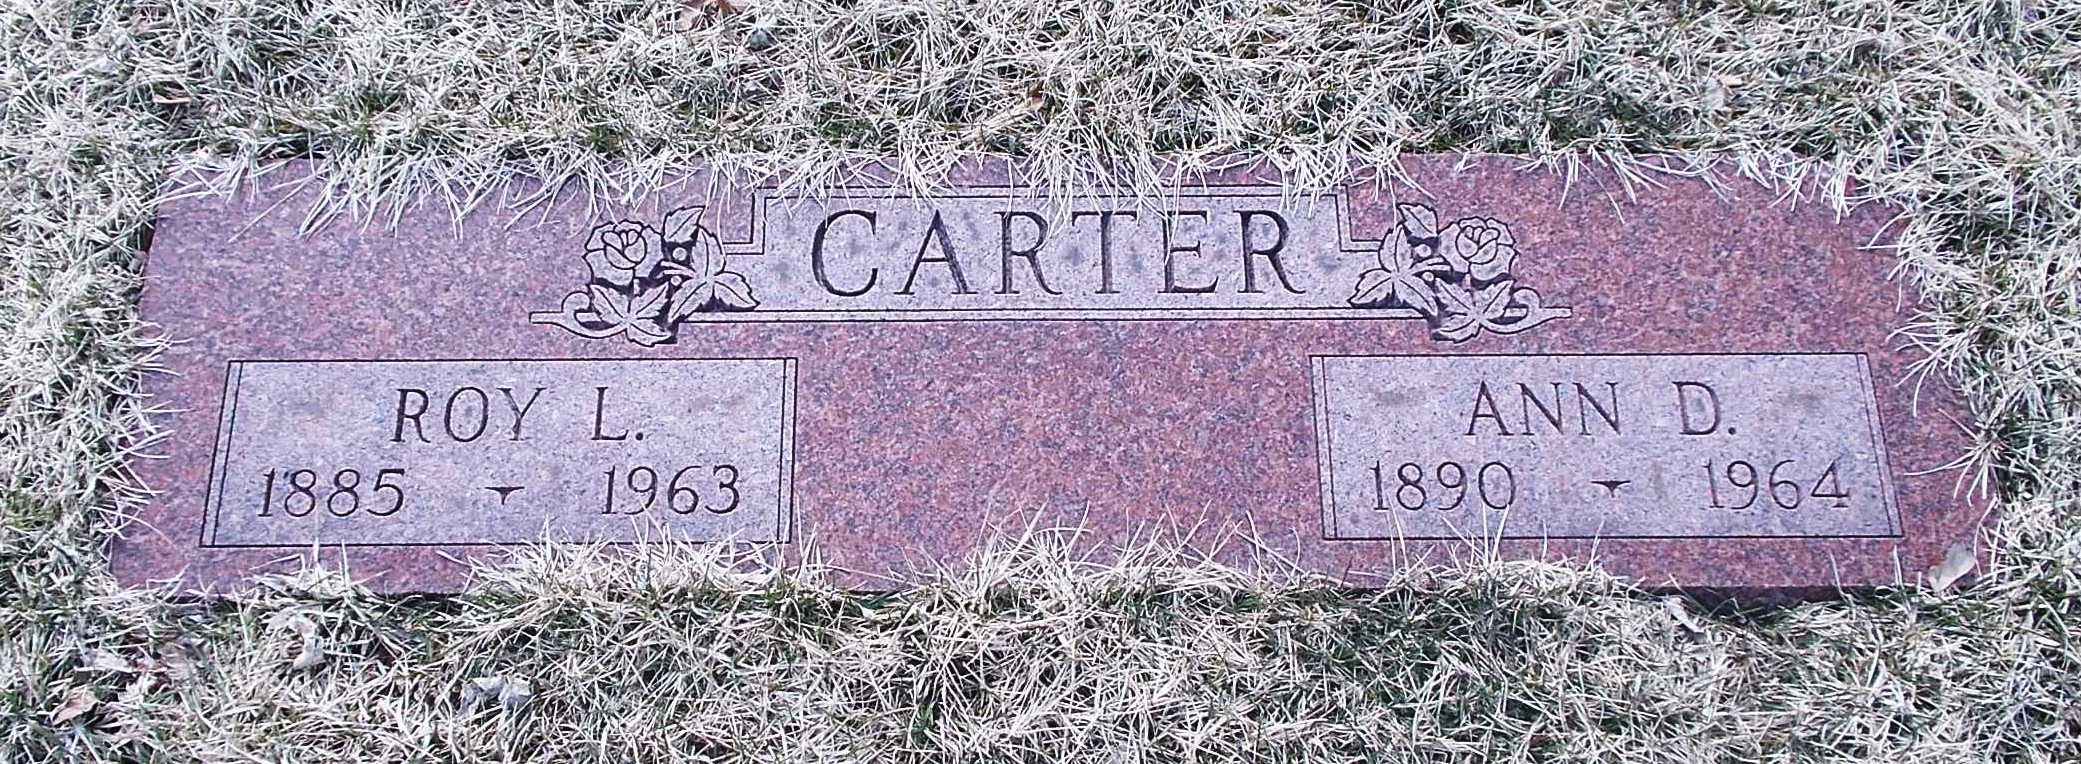 Roy L Carter